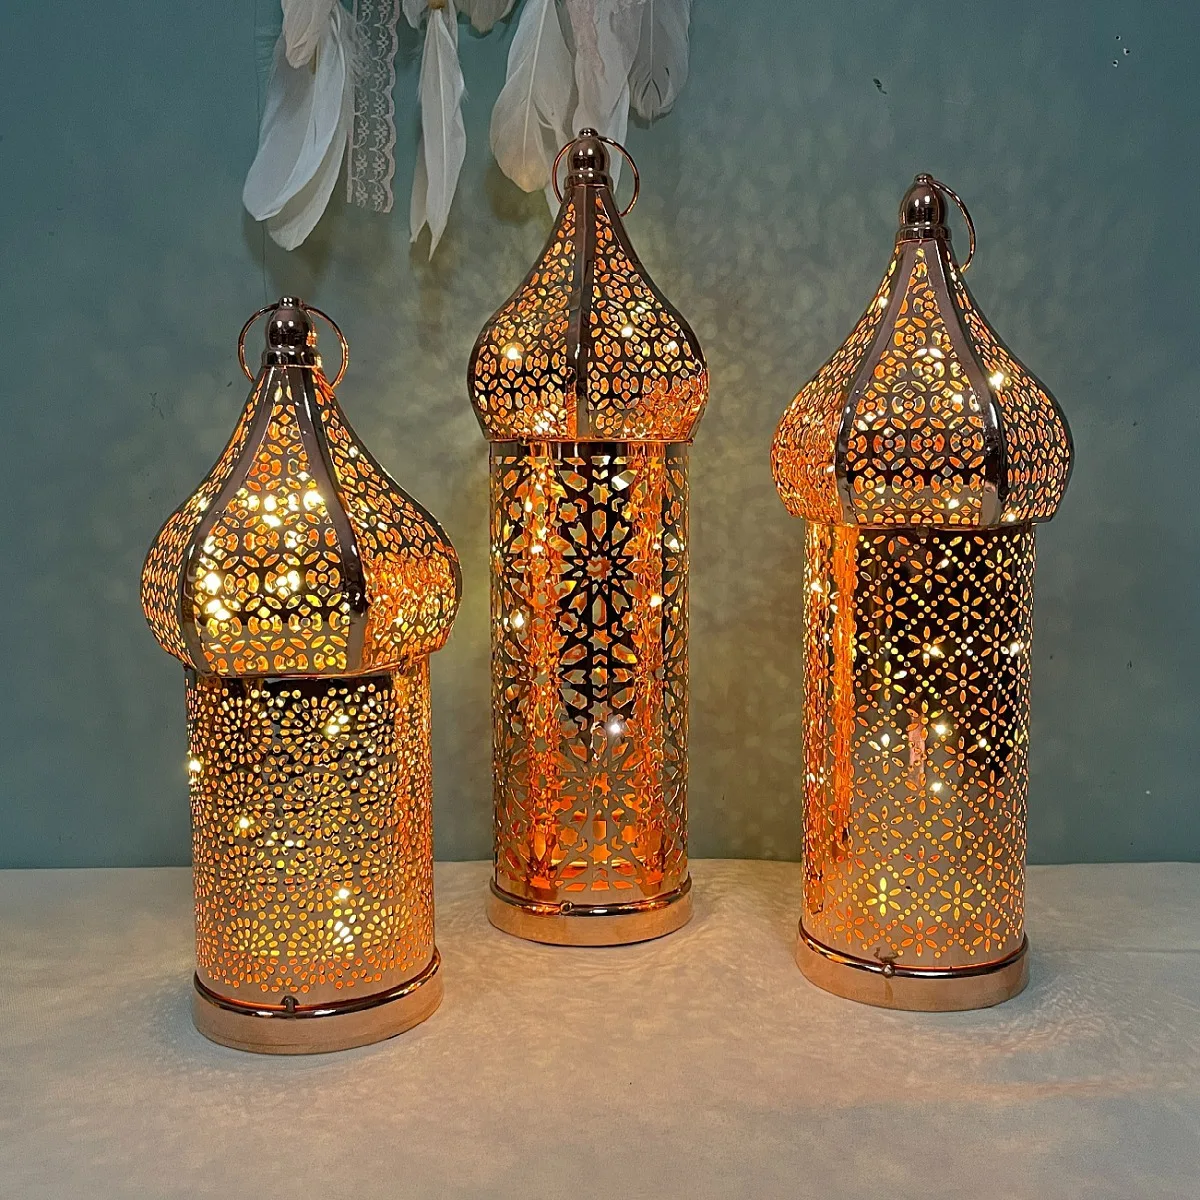 

Eid Mubarak White Hollow Led Wind Lamp Iron Art Lamp Ornaments Decorations Party Supplies Ramadan Kareem Lanterns